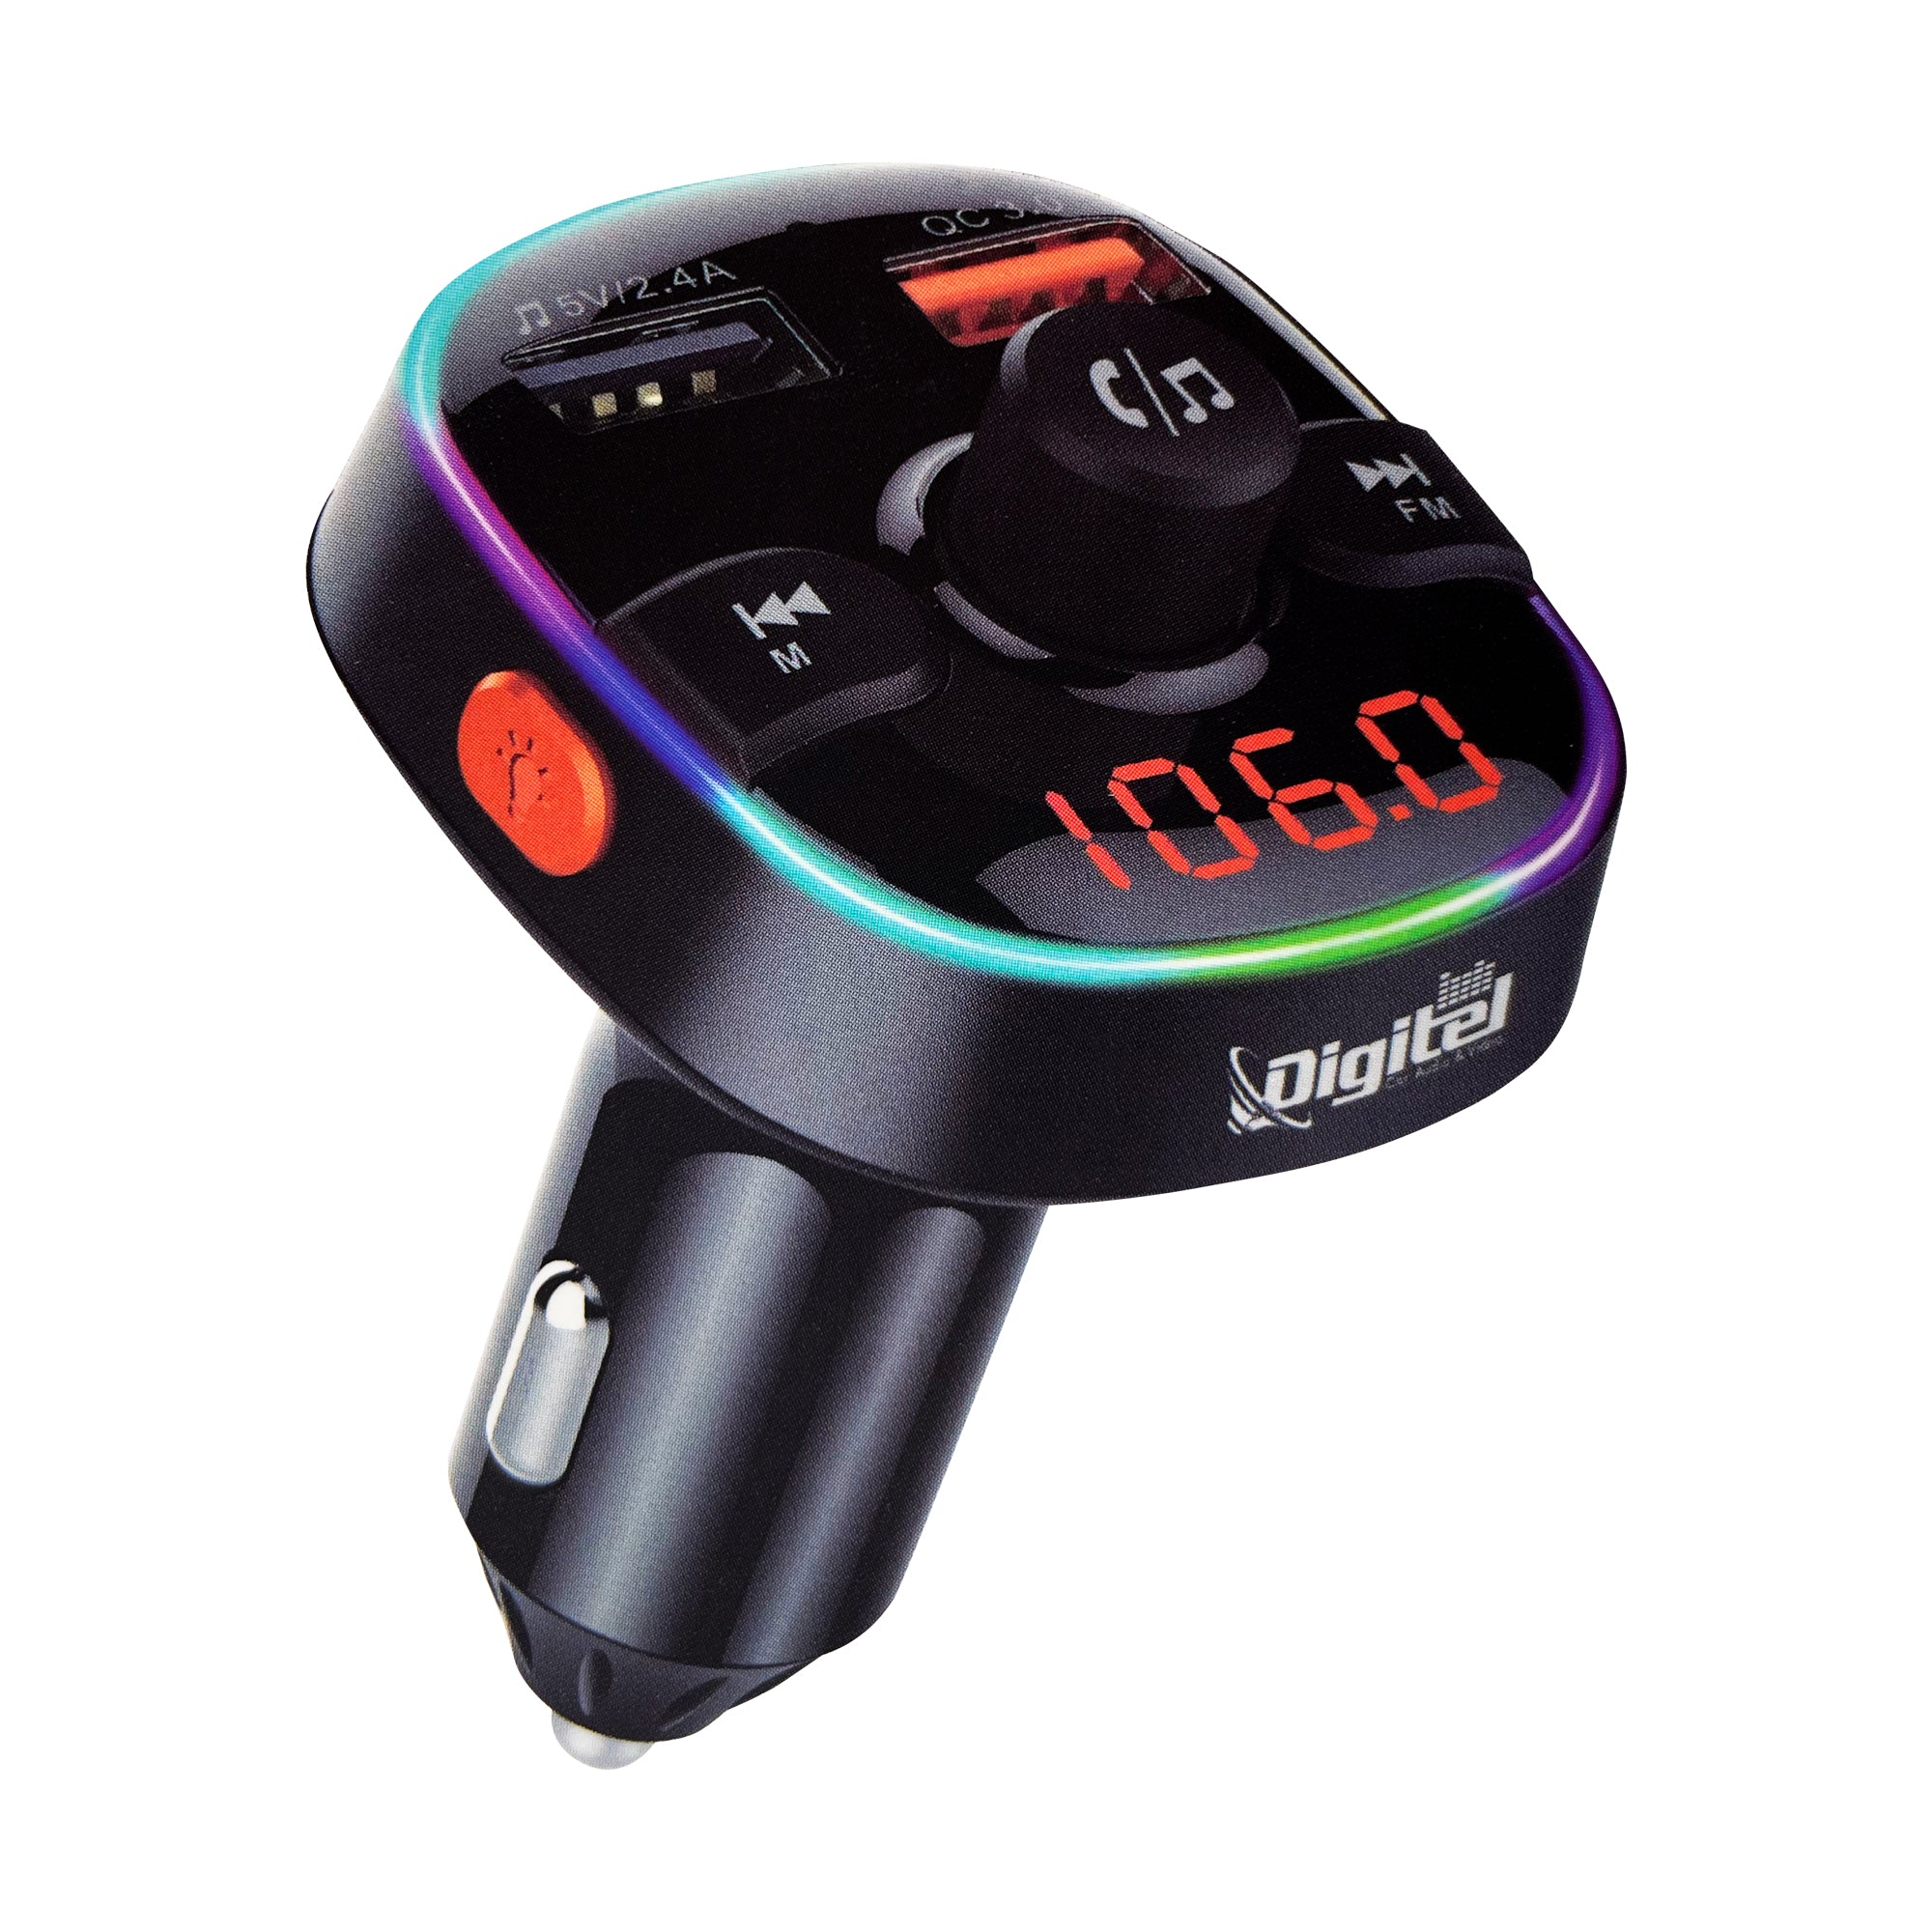 Cargador coche Bluetooth Carg6 - Pantalla LED, Transmisor FM